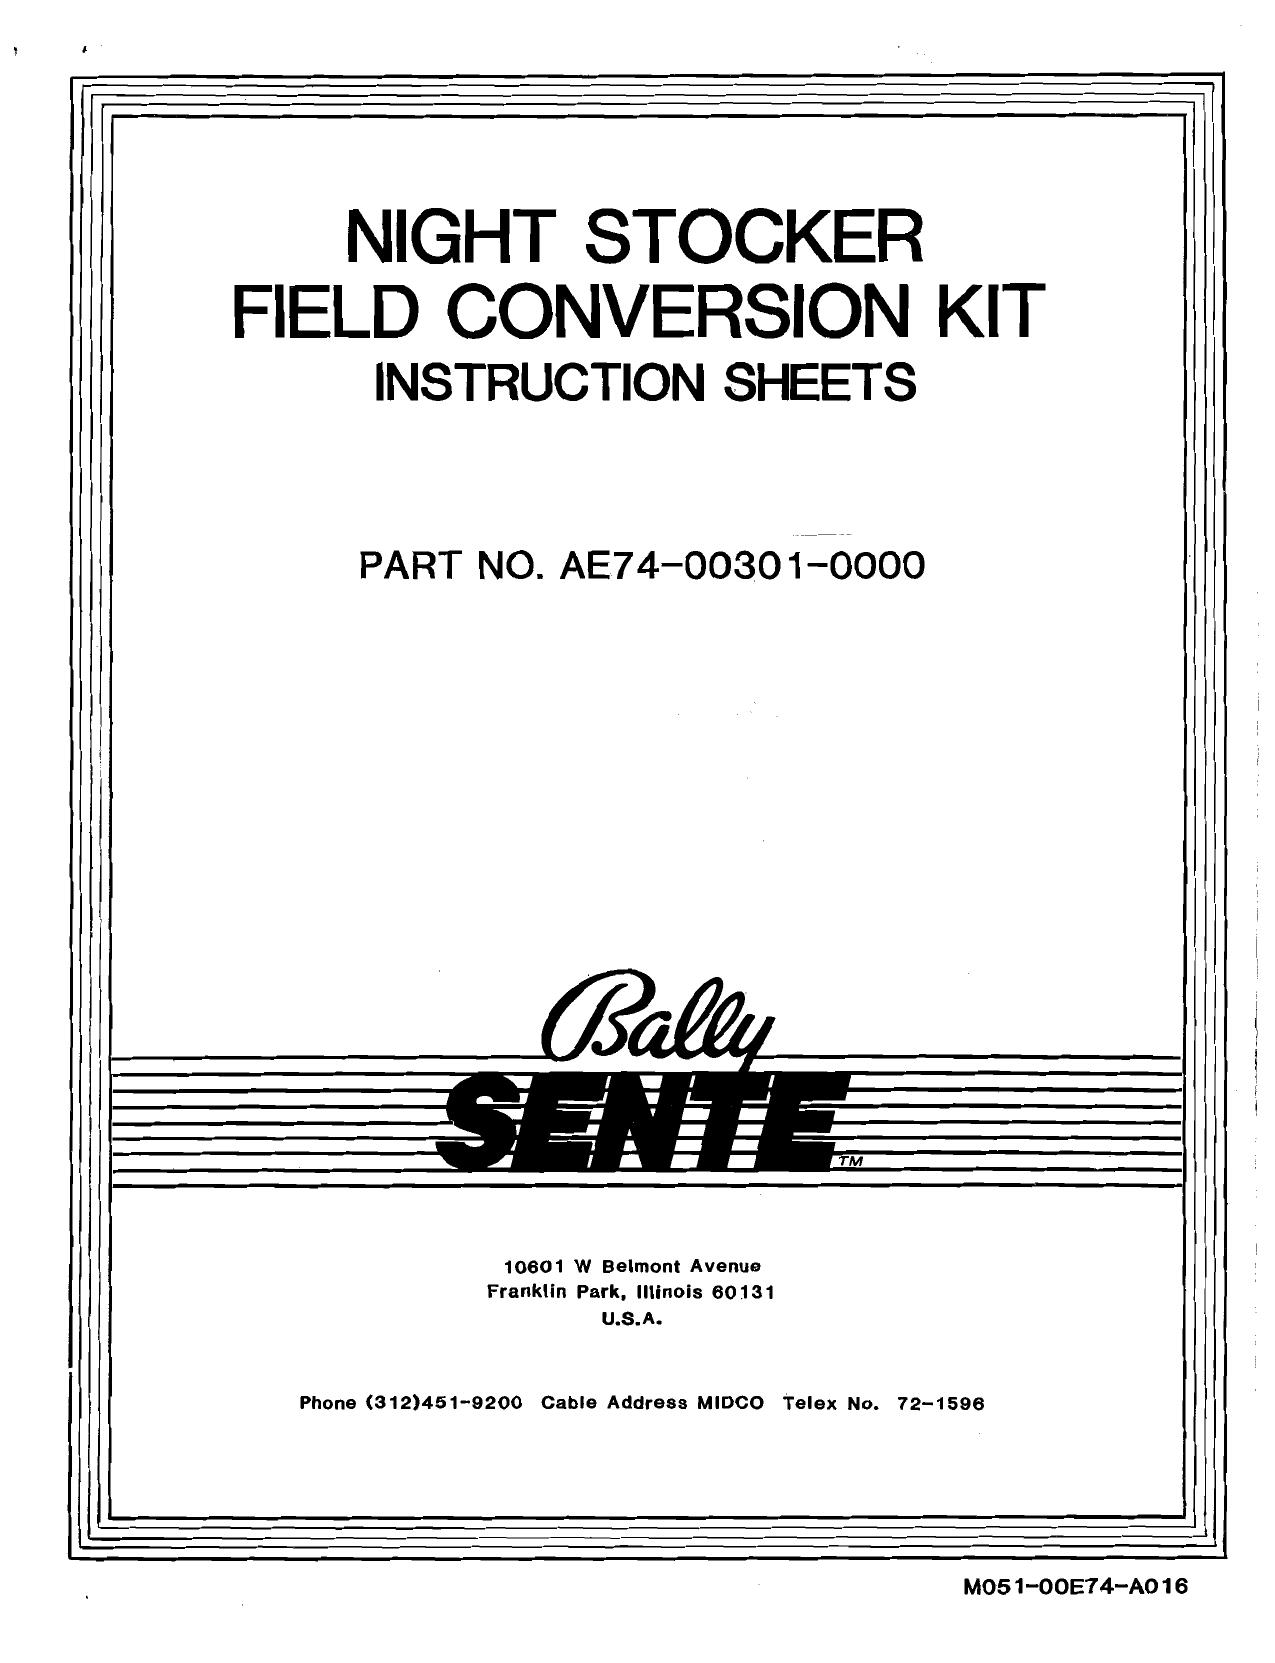 Night Stocker Field Conversion Kit